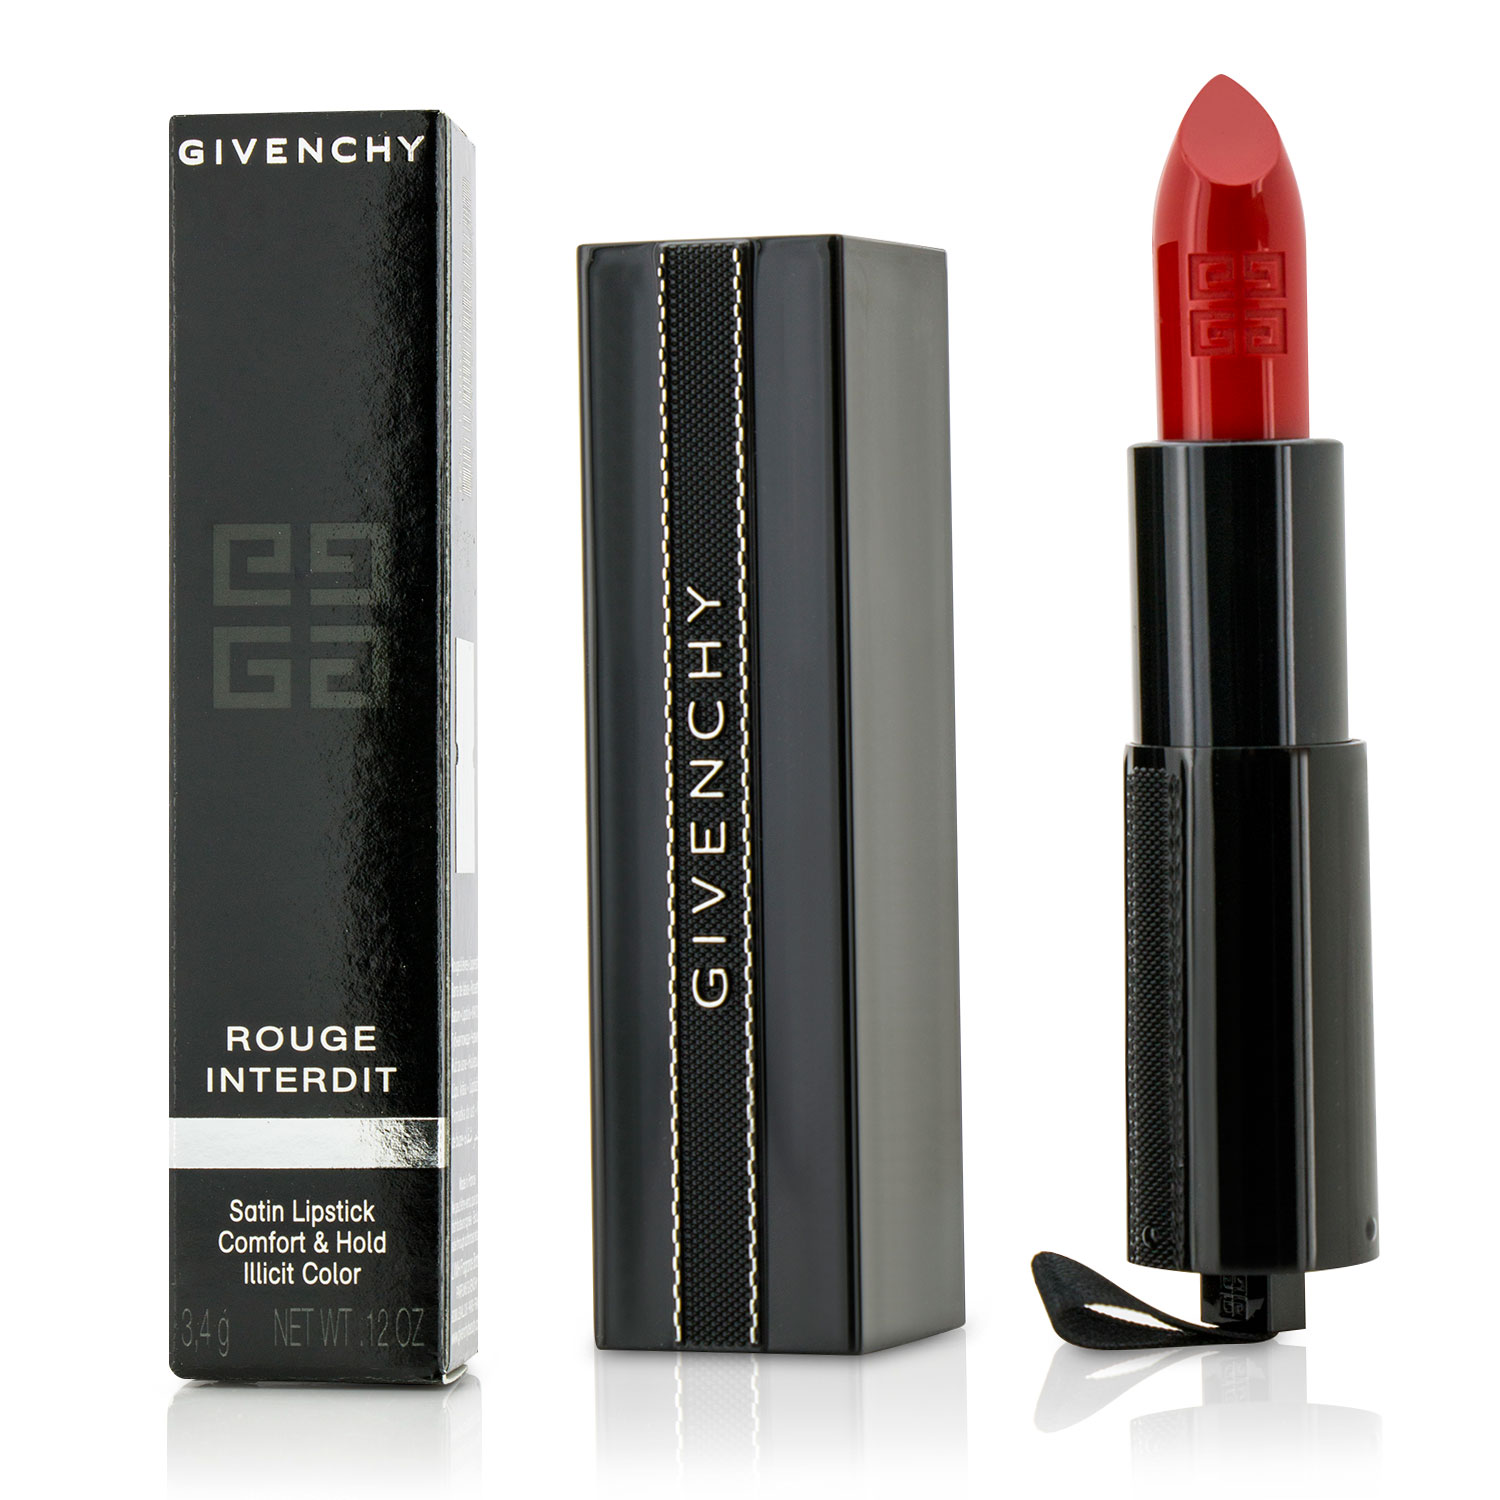 Rouge Interdit Satin Lipstick - # 14 Redlight Givenchy Image